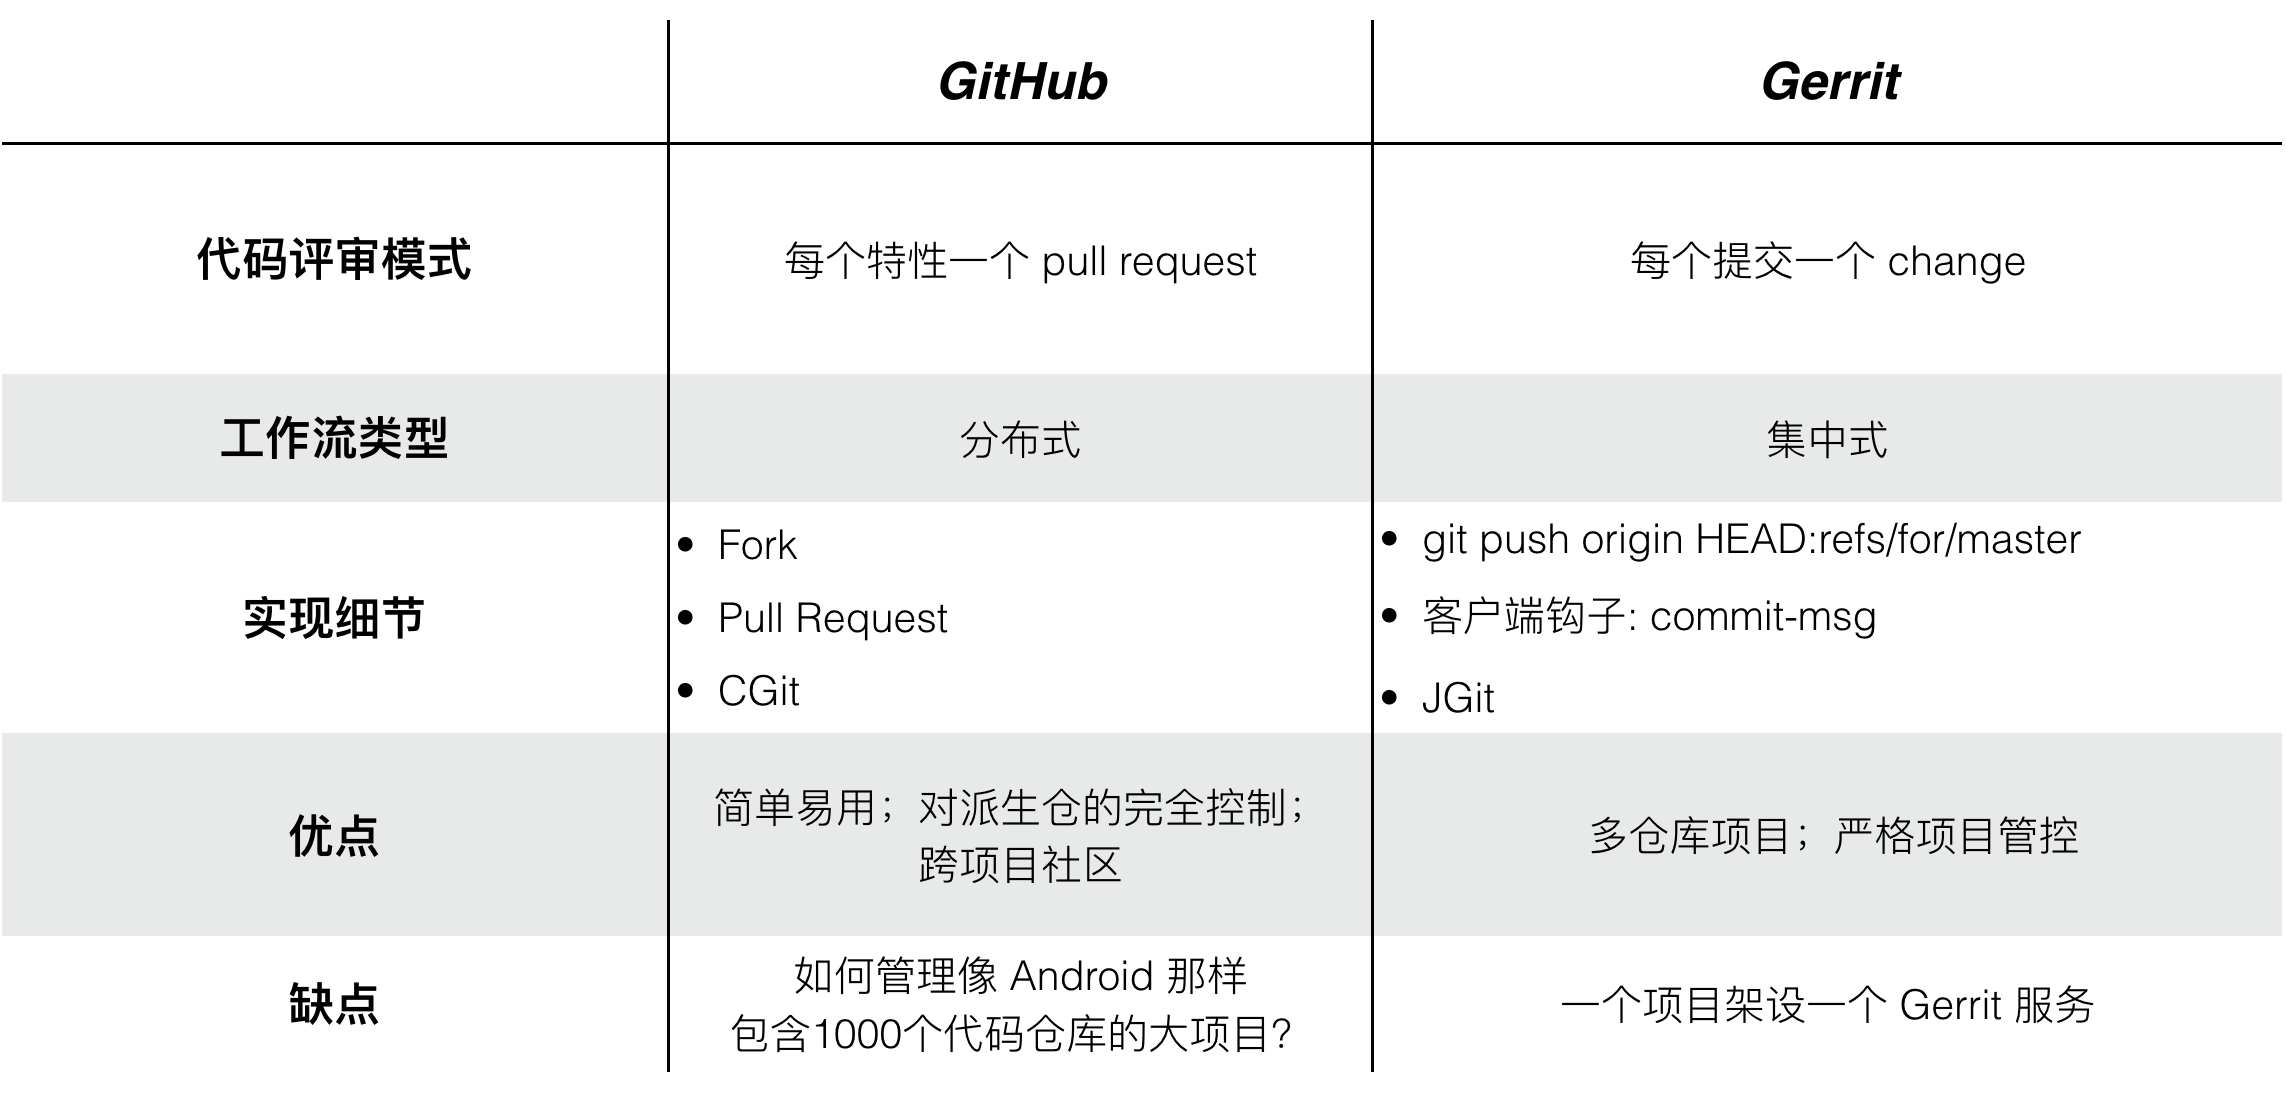 图: GitHub、Gerrit 协同模式比较